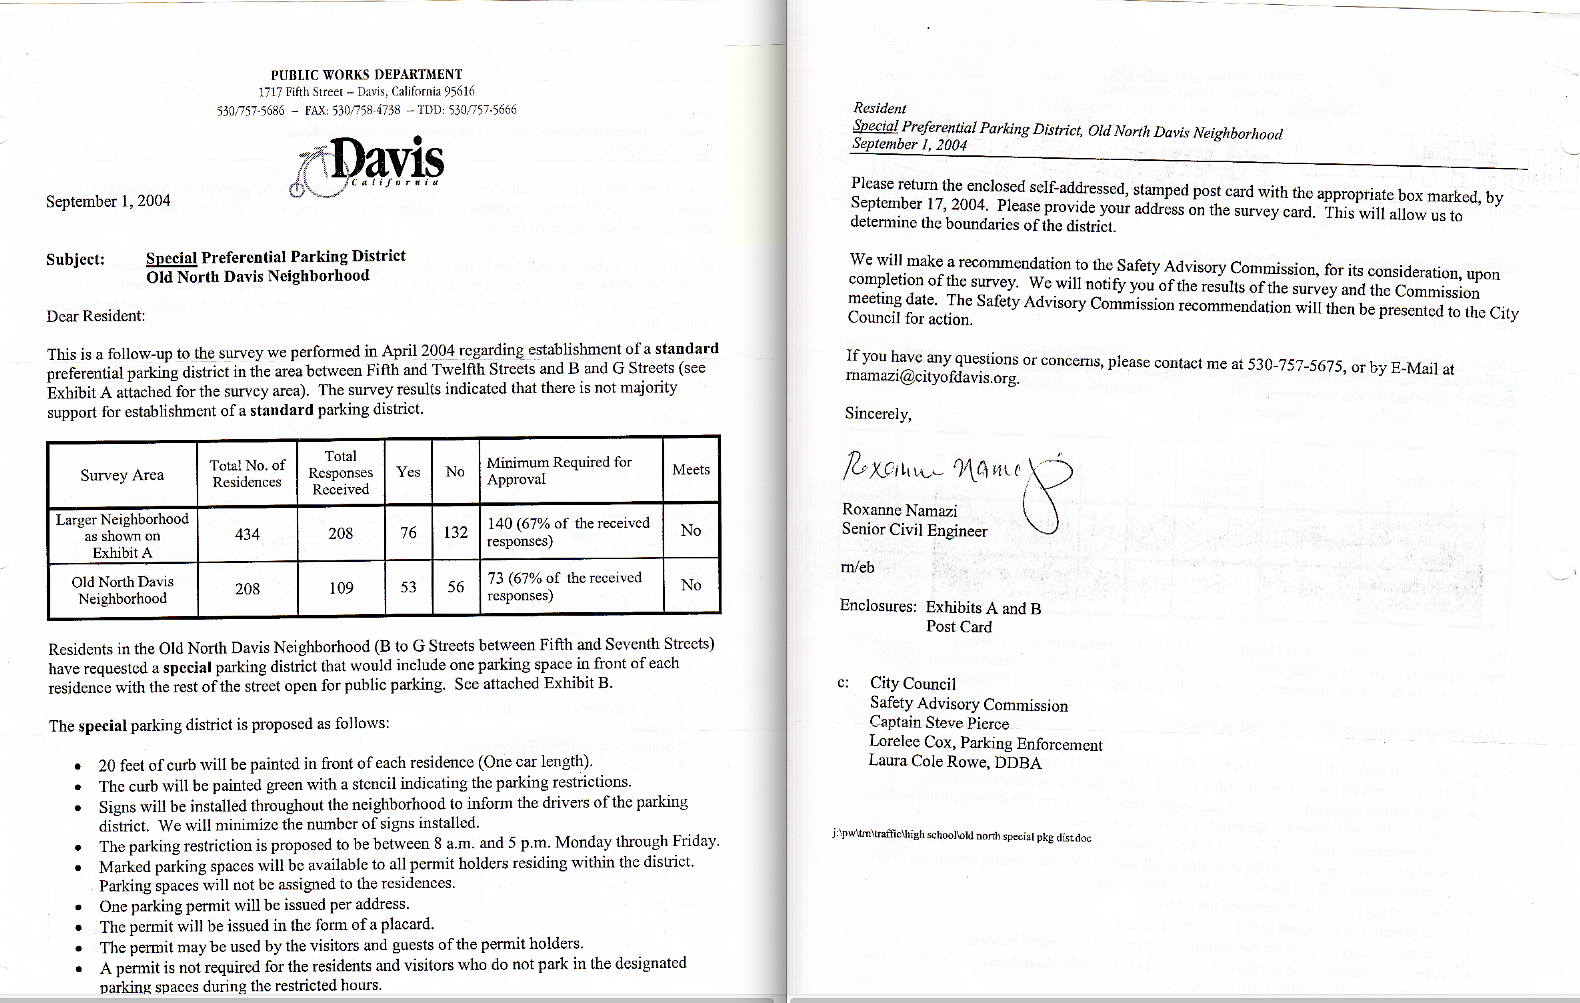 Survey Form Dated Sept. 1. 2004